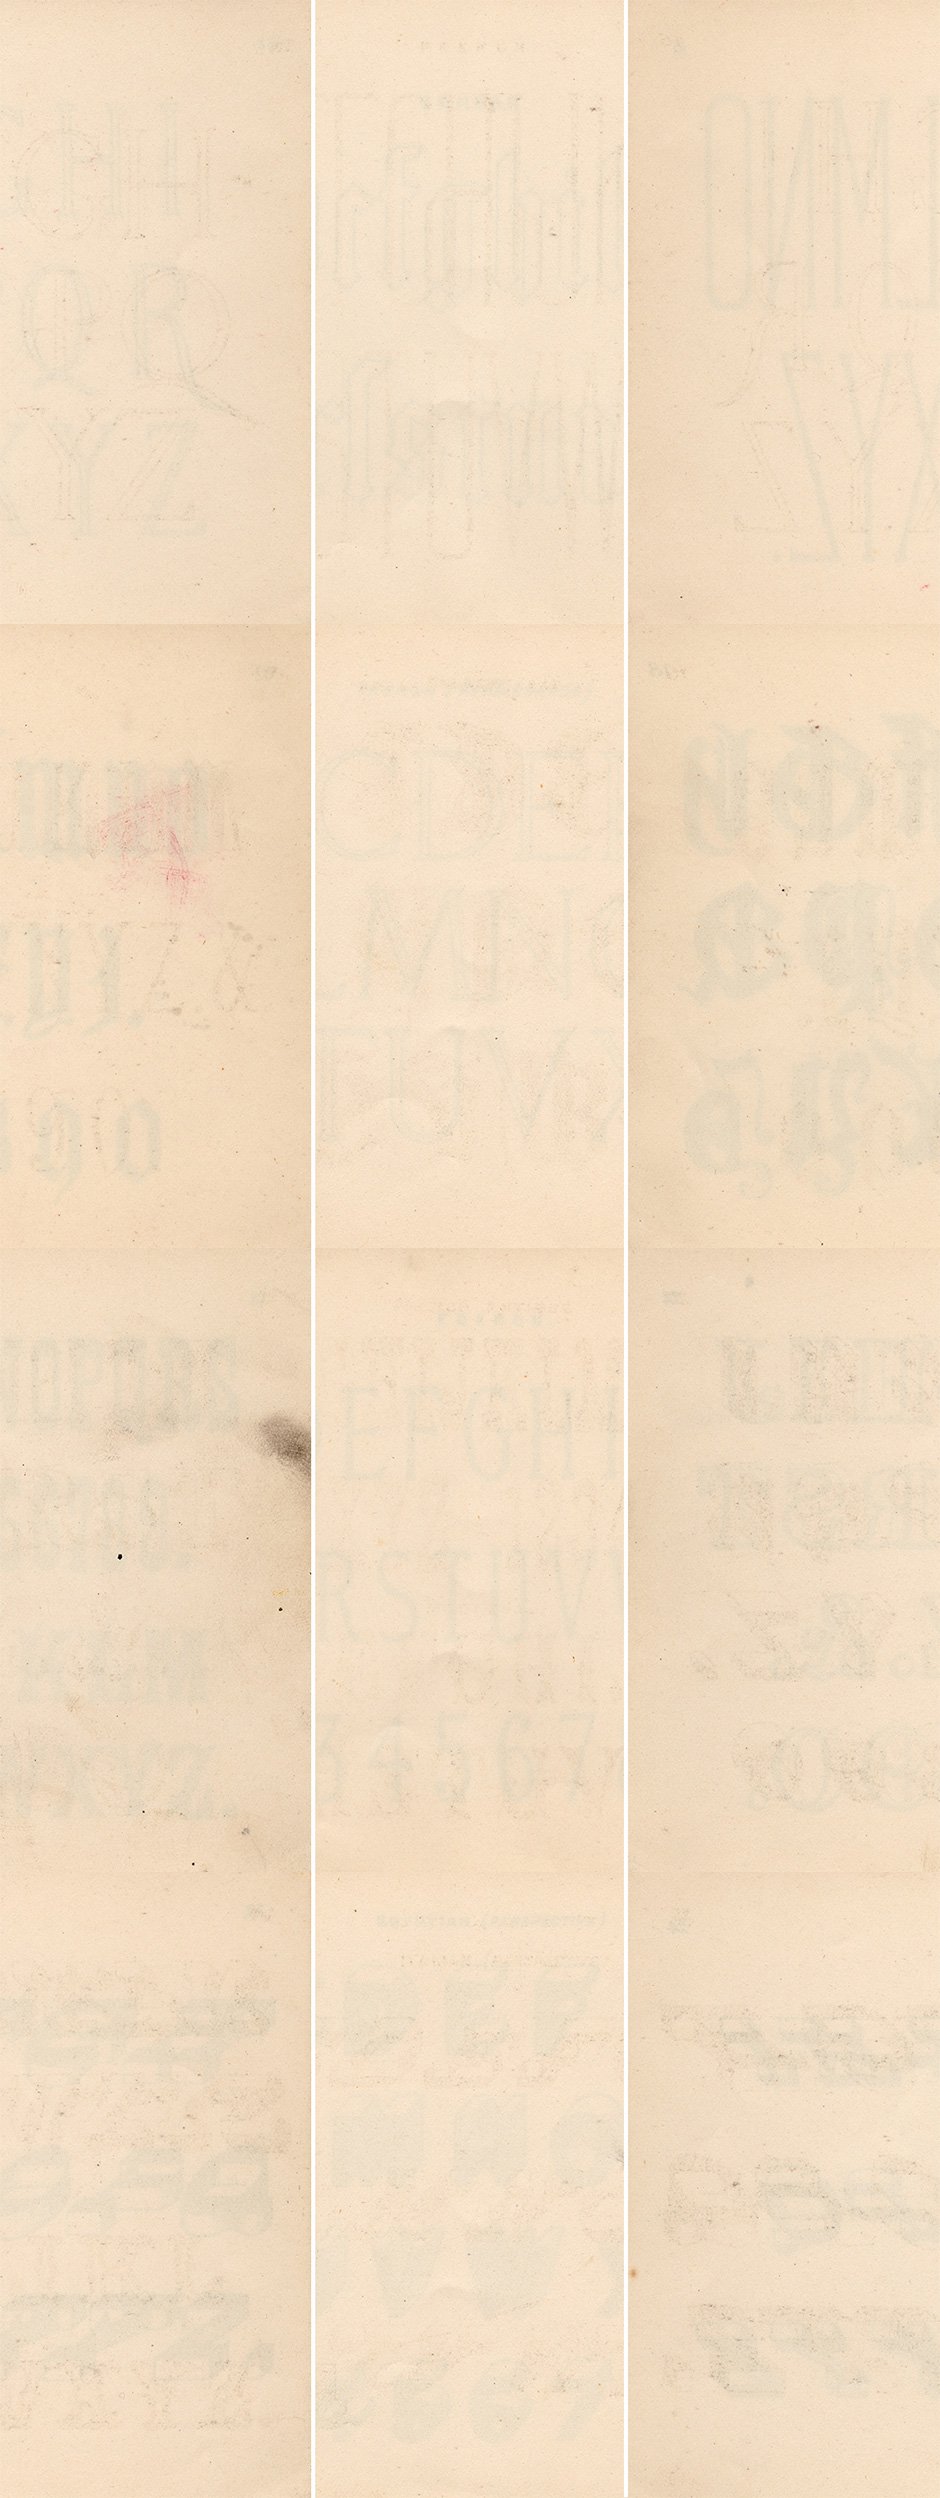 Vintage Paper Textures Vol. 2